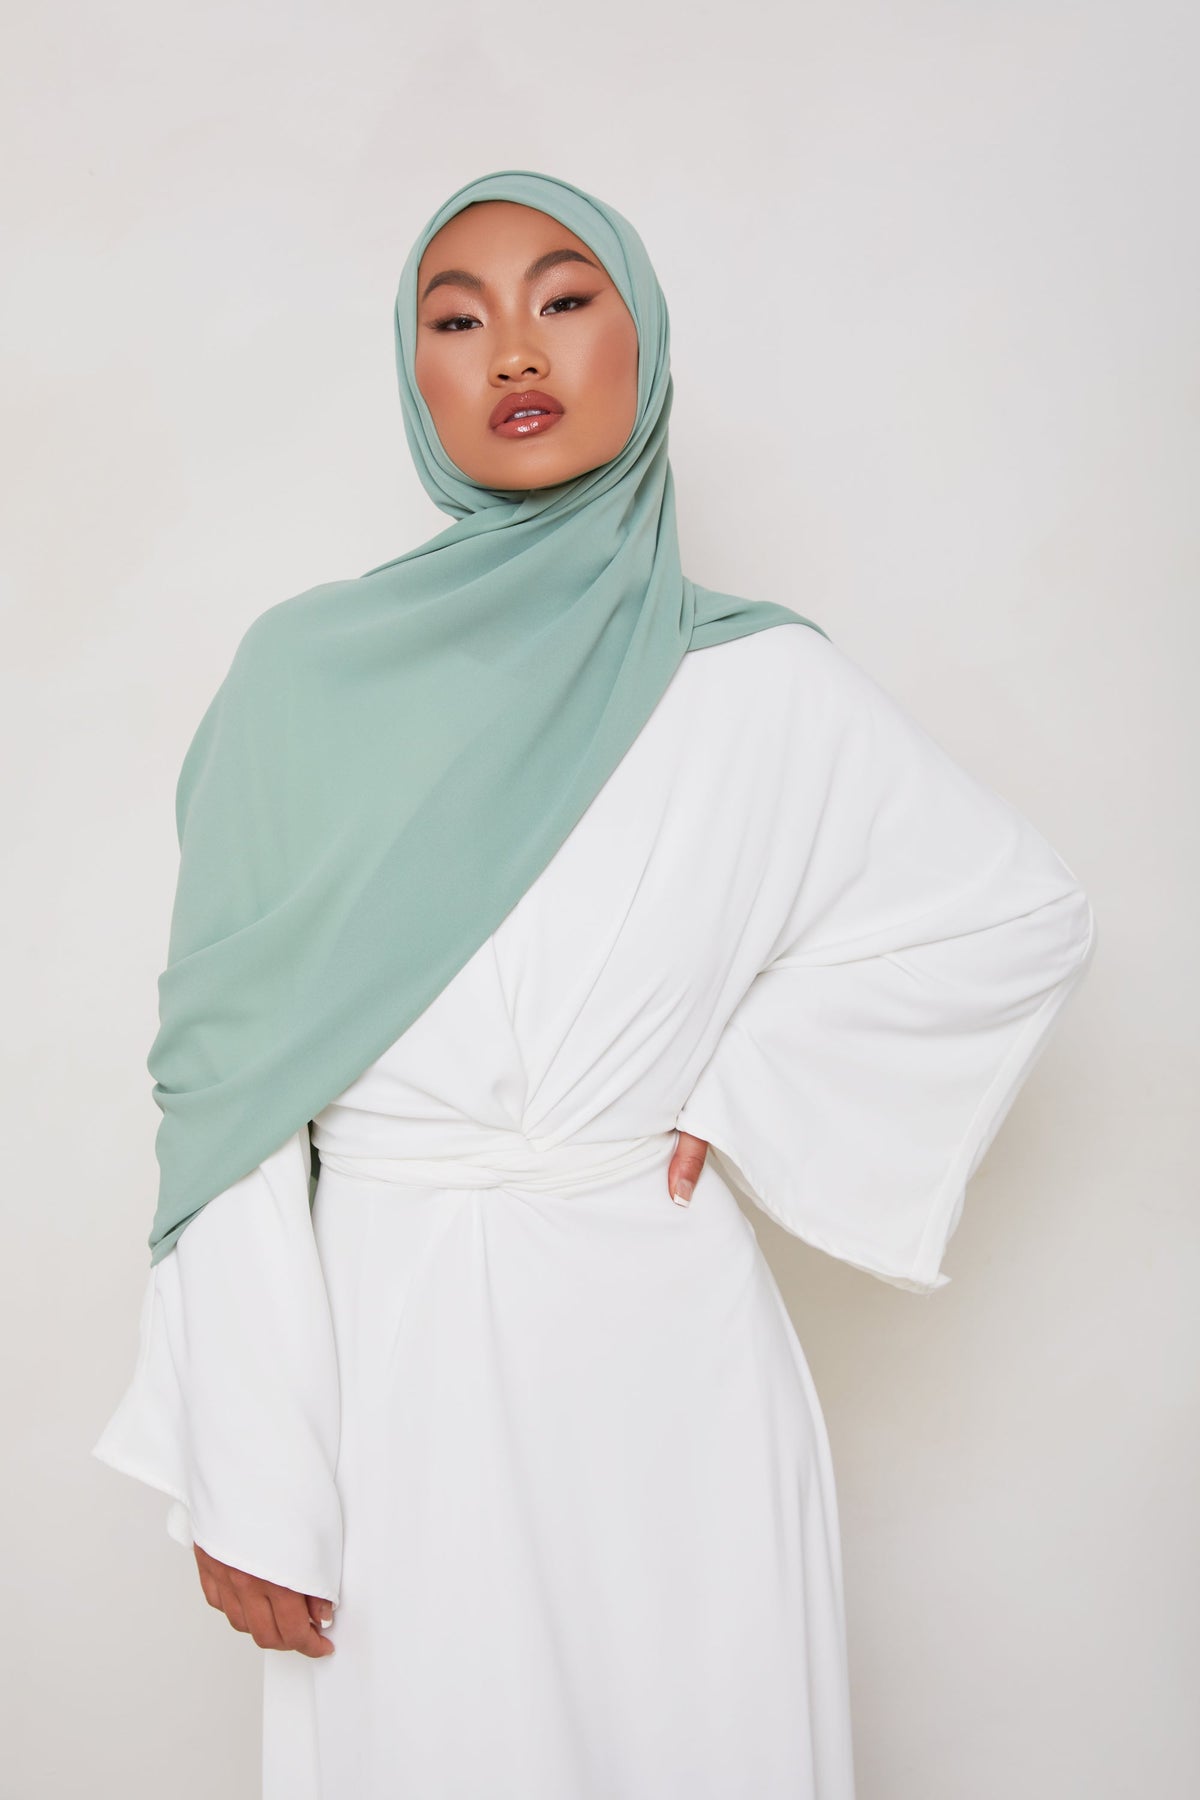 TEXTURE Classic Chiffon Hijab - Sea Salt epschoolboard 